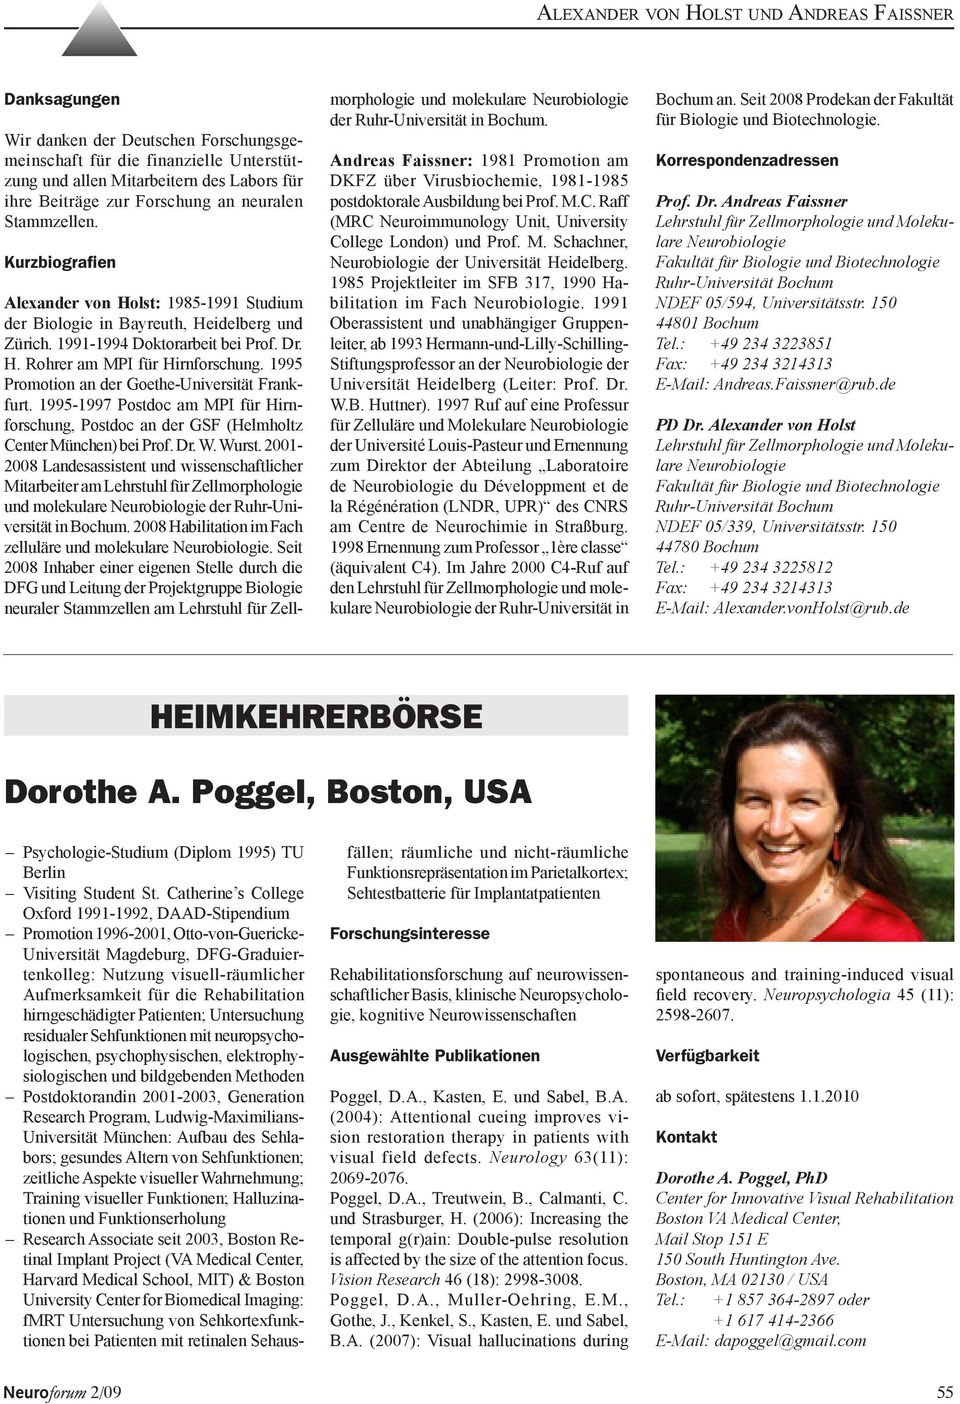 1995 Promotion an der Goethe-Universität Frankfurt. 1995-1997 Postdoc am MPI für Hirnforschung, Postdoc an der GSF (Helmholtz Center München) bei Prof. Dr. W. Wurst.